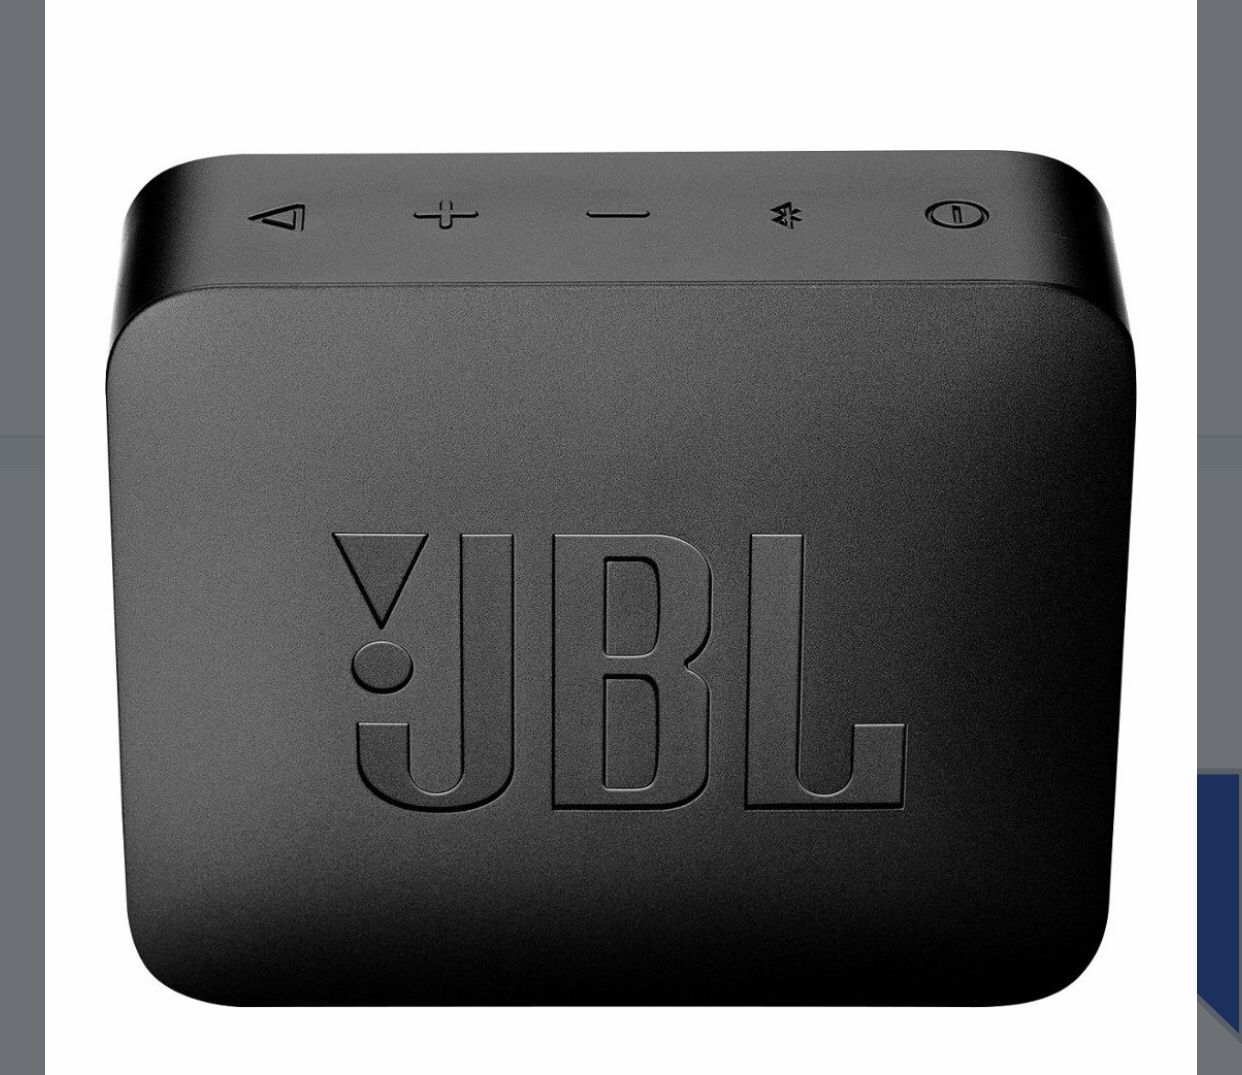 JBL - Go 2 Portable Bluetooth Speaker - Black